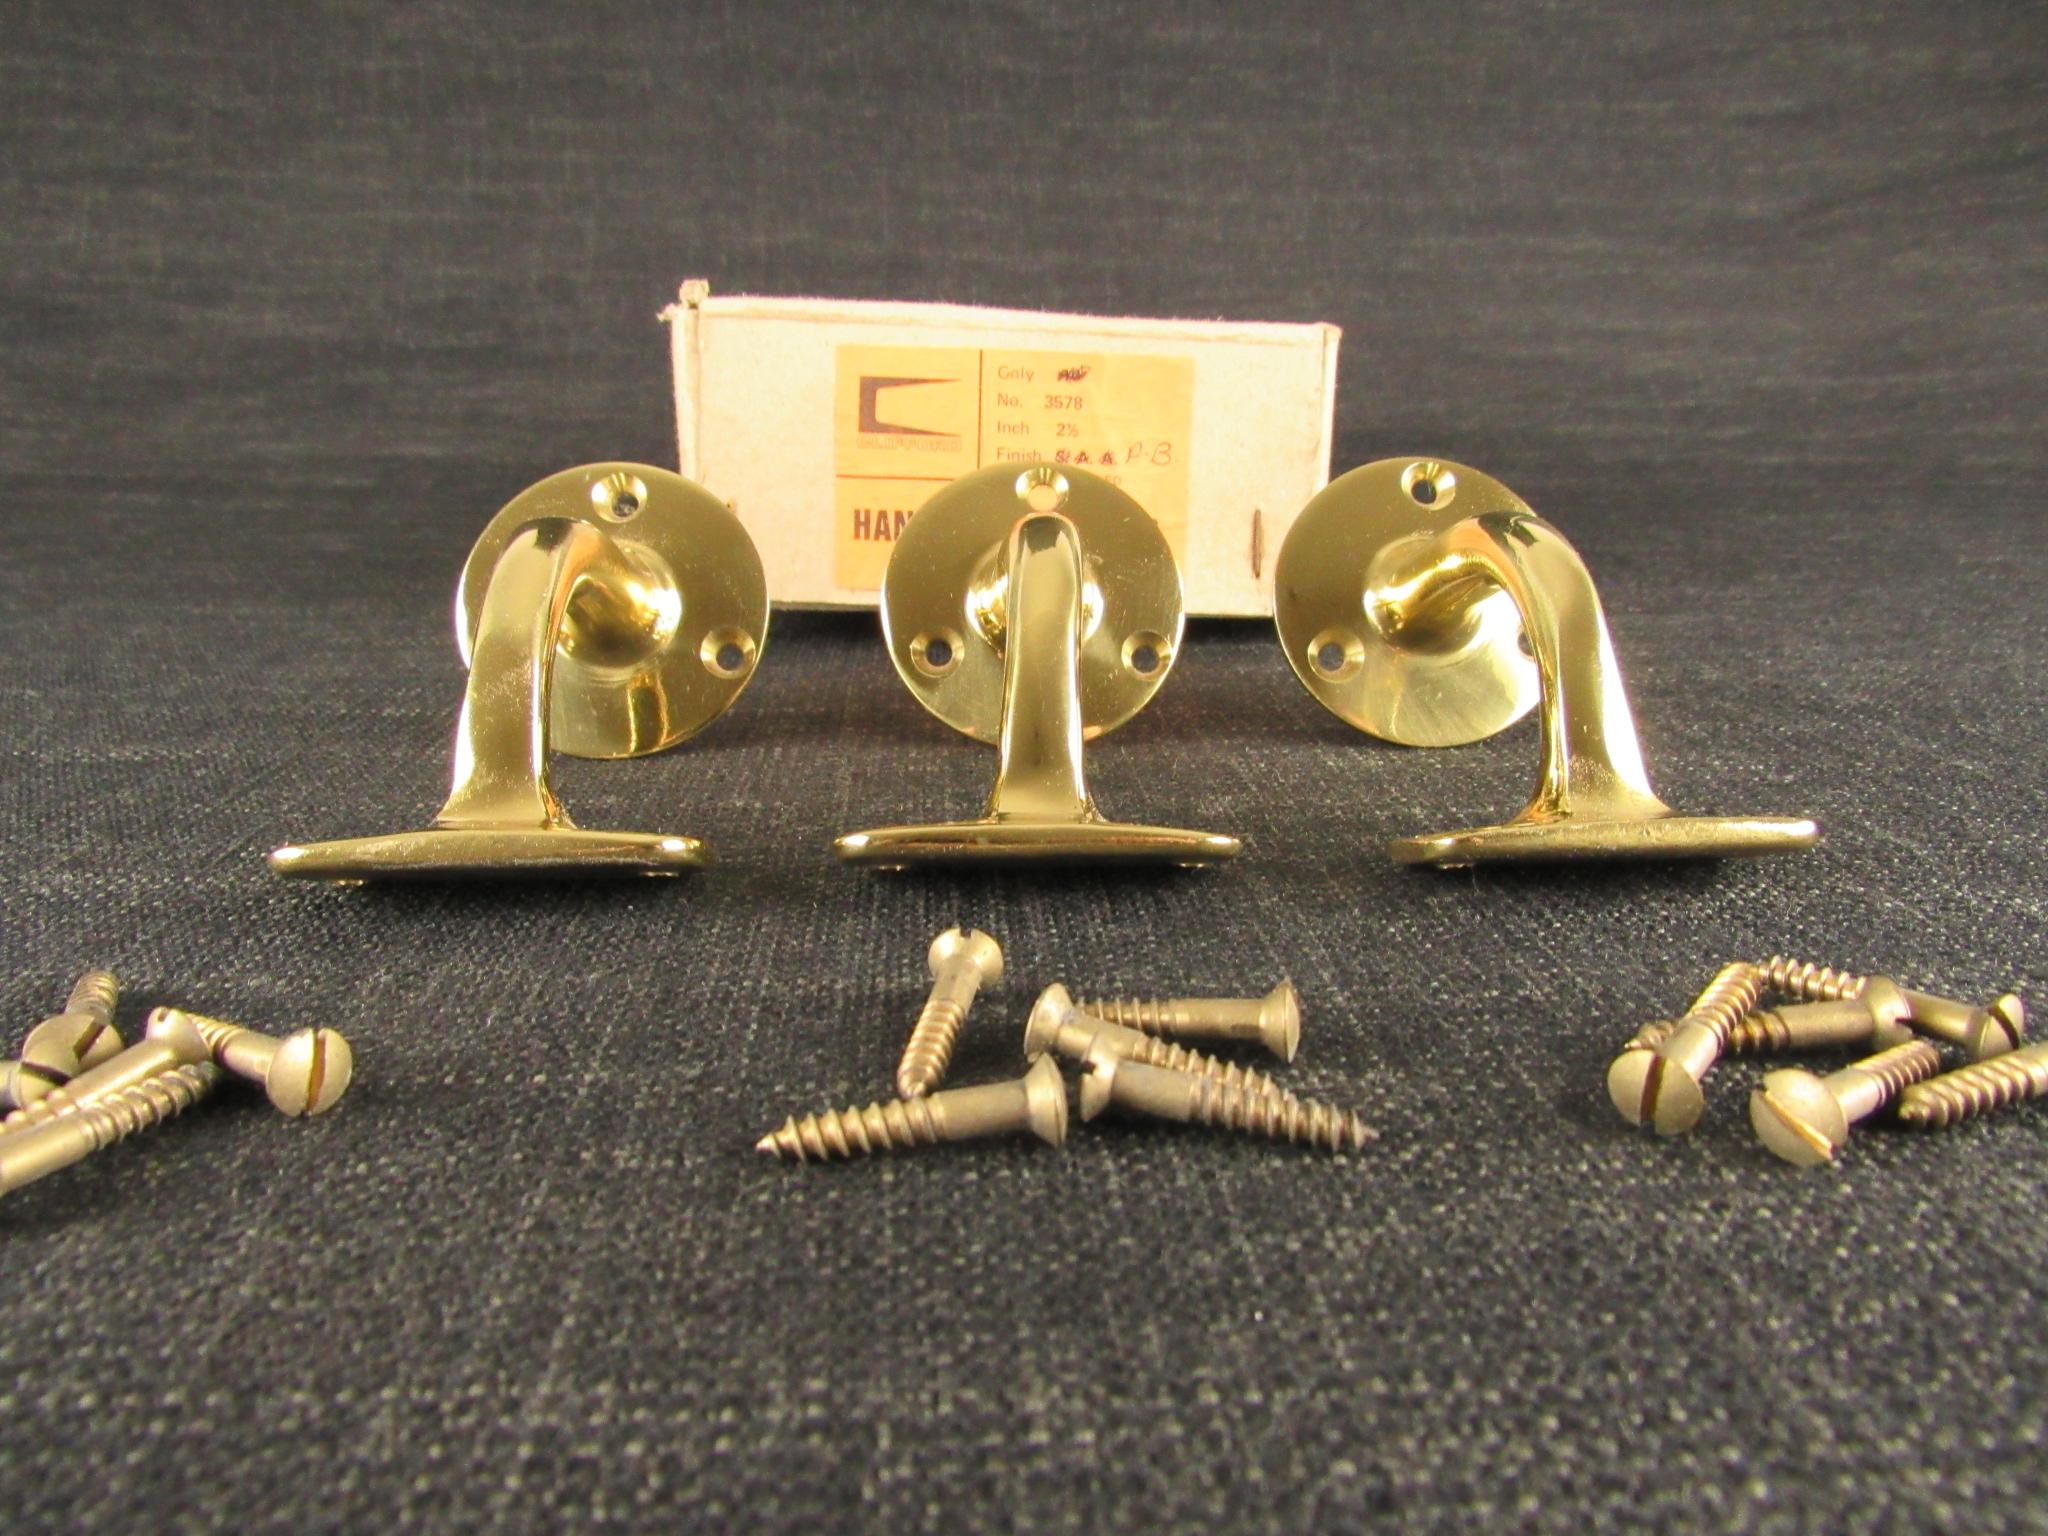 CLIFFORD Brass Handrail Brackets